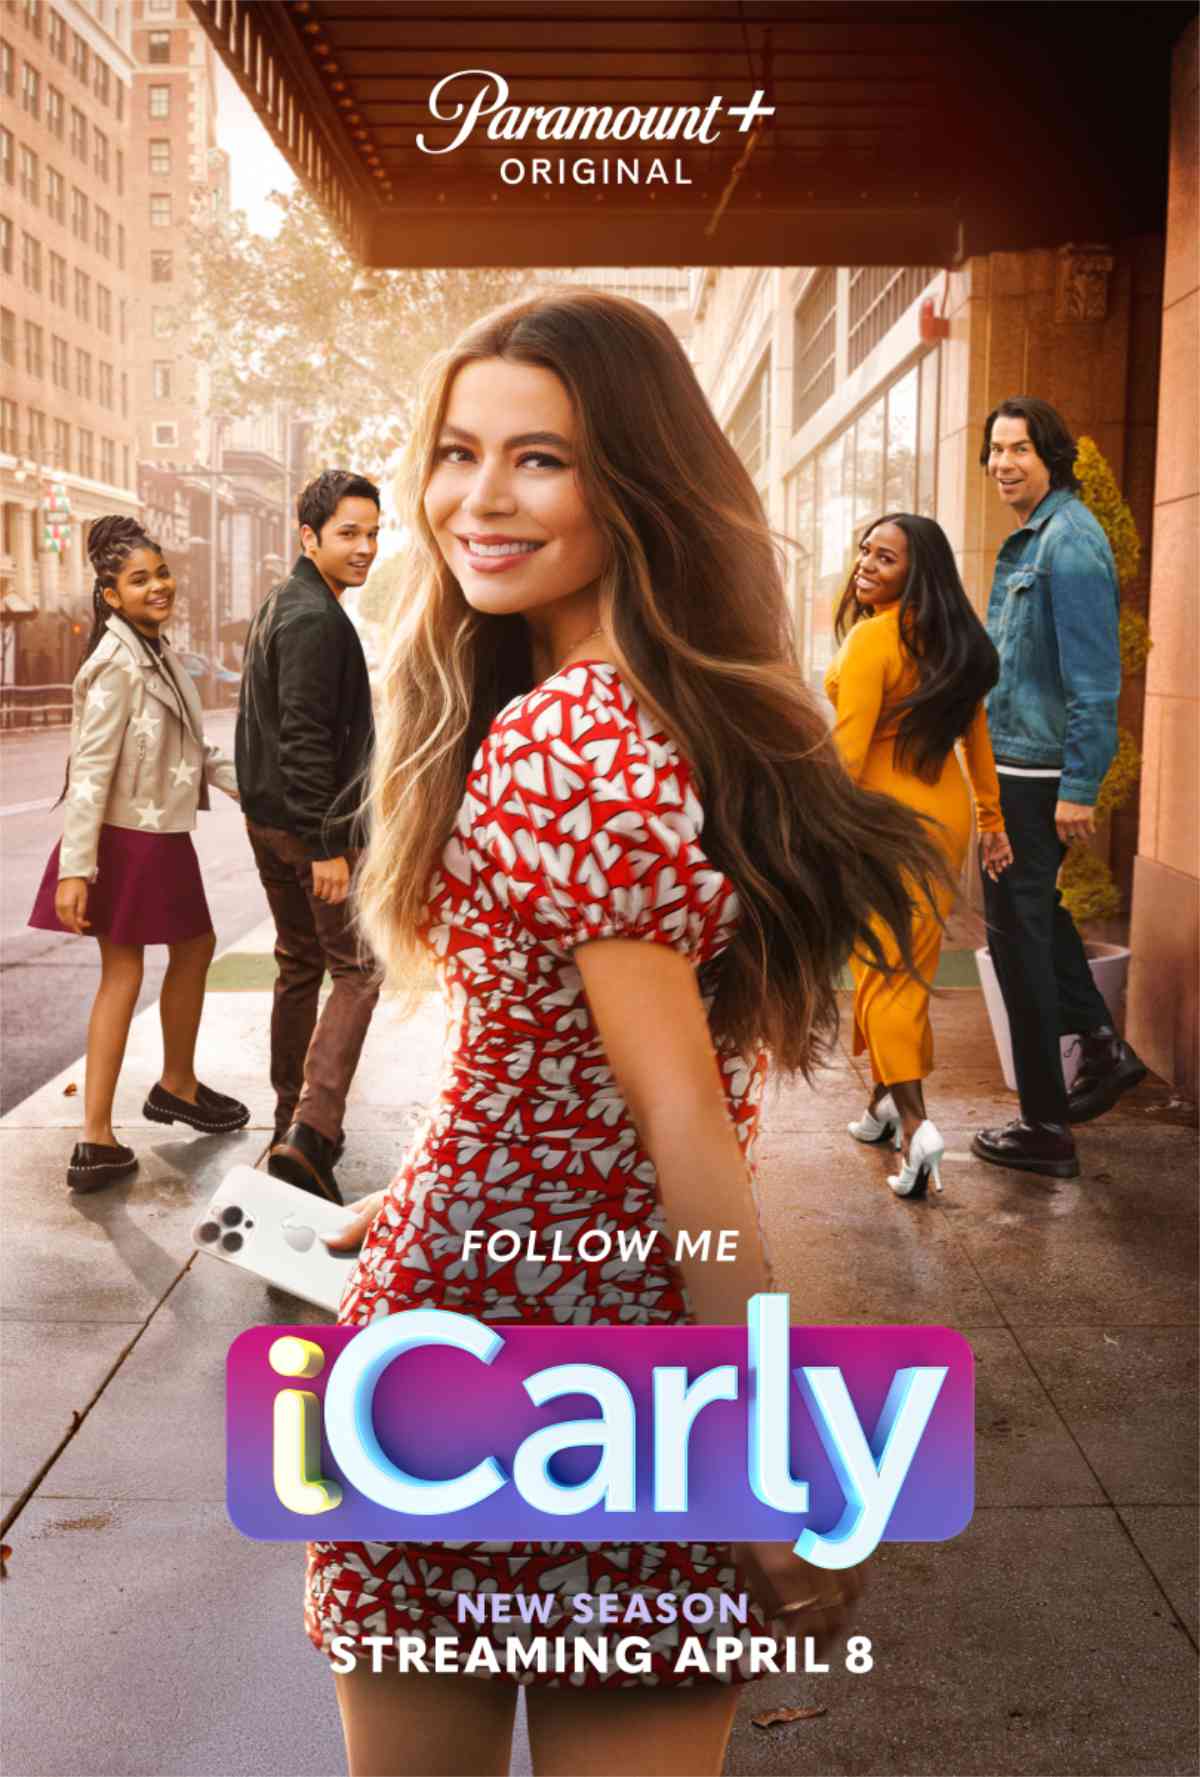 iCarly Season 2 Trailer